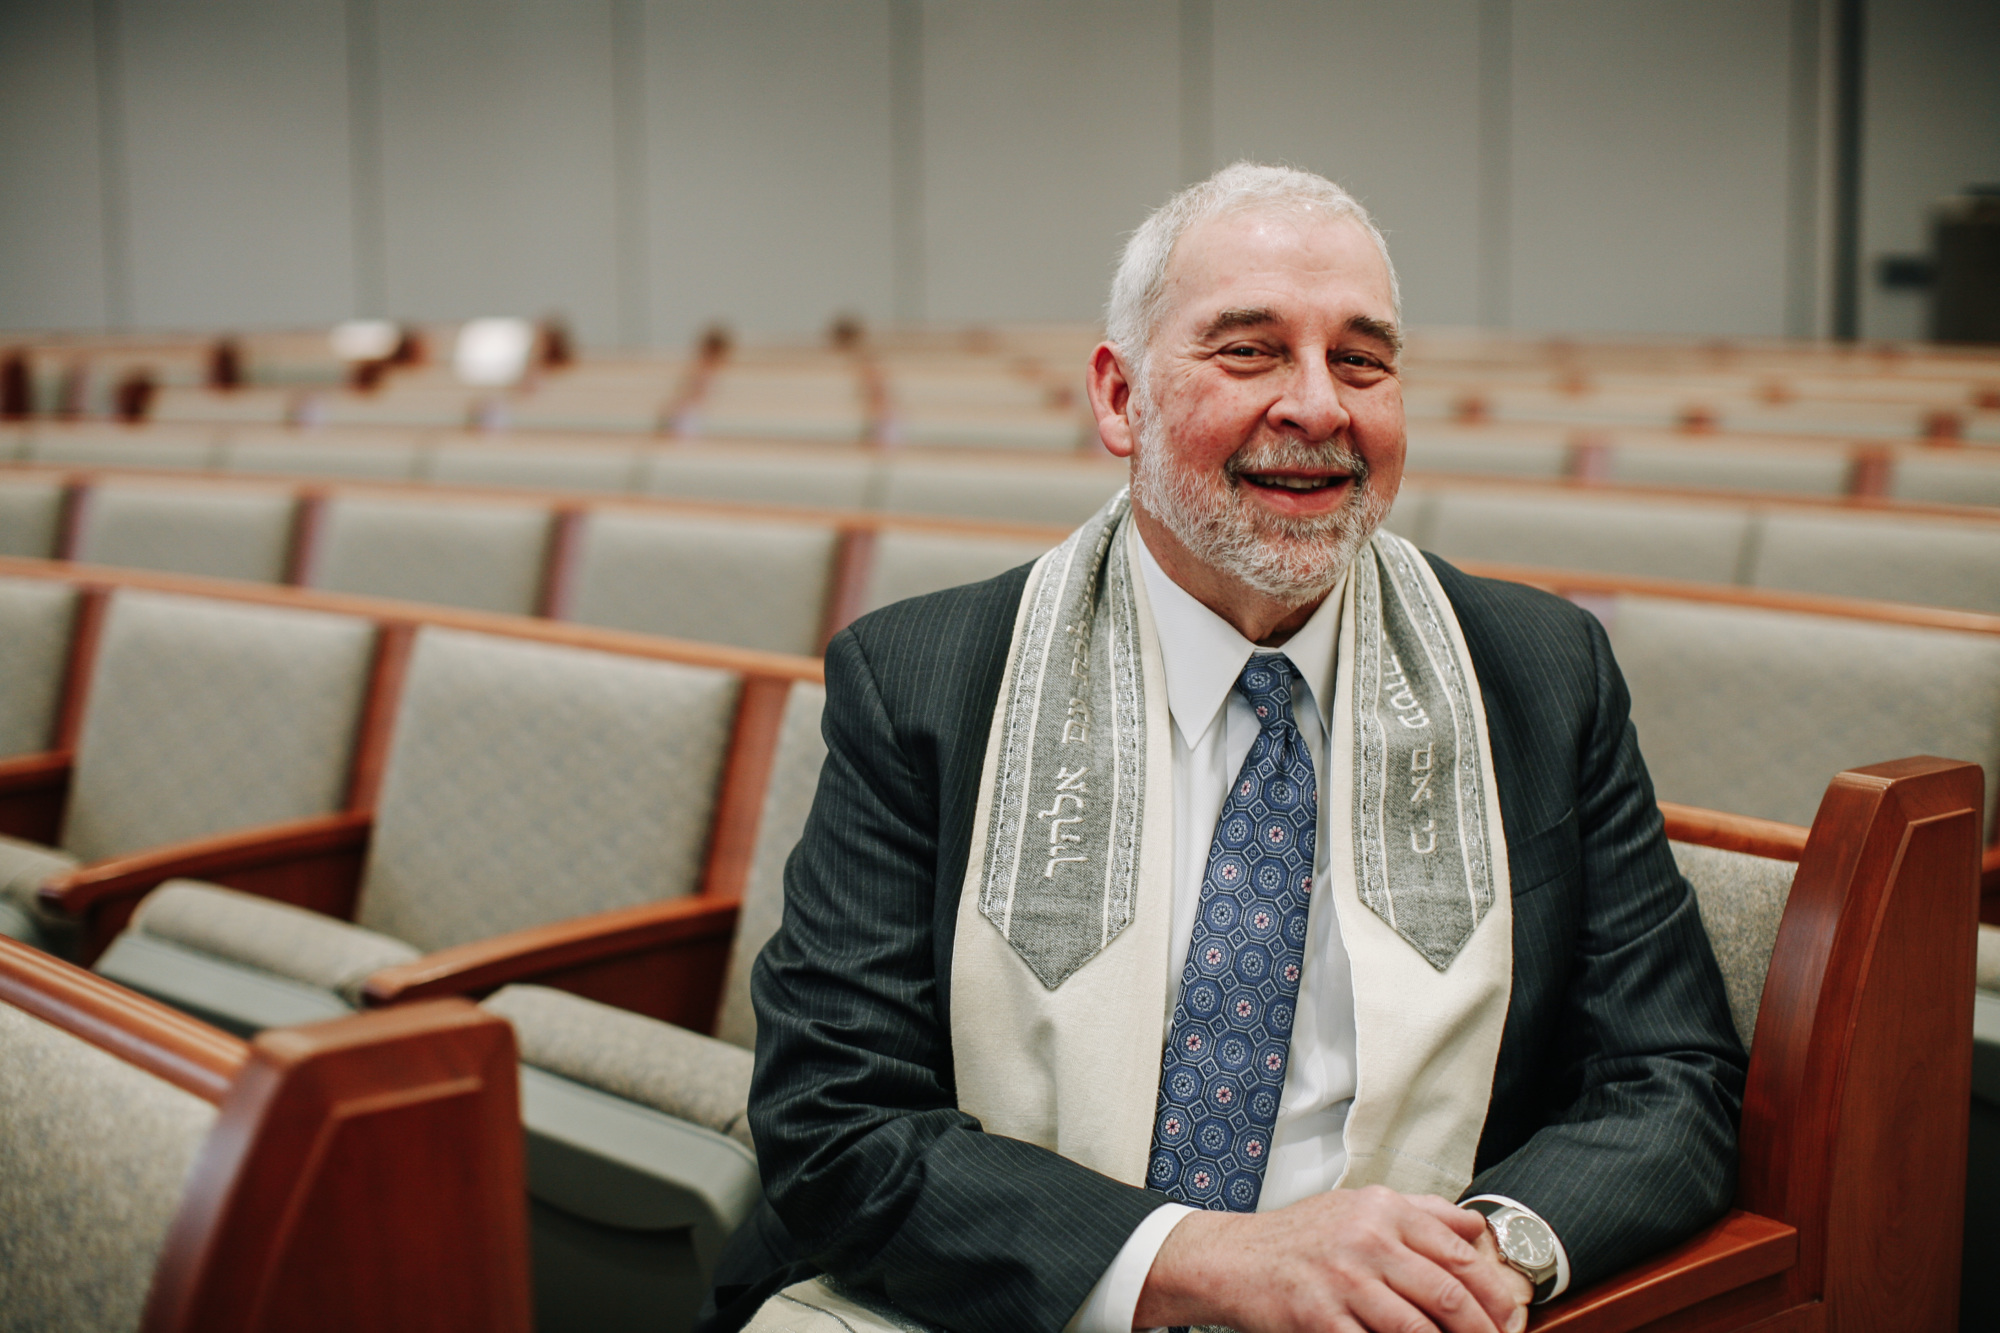 Rabbi Jim Bennett